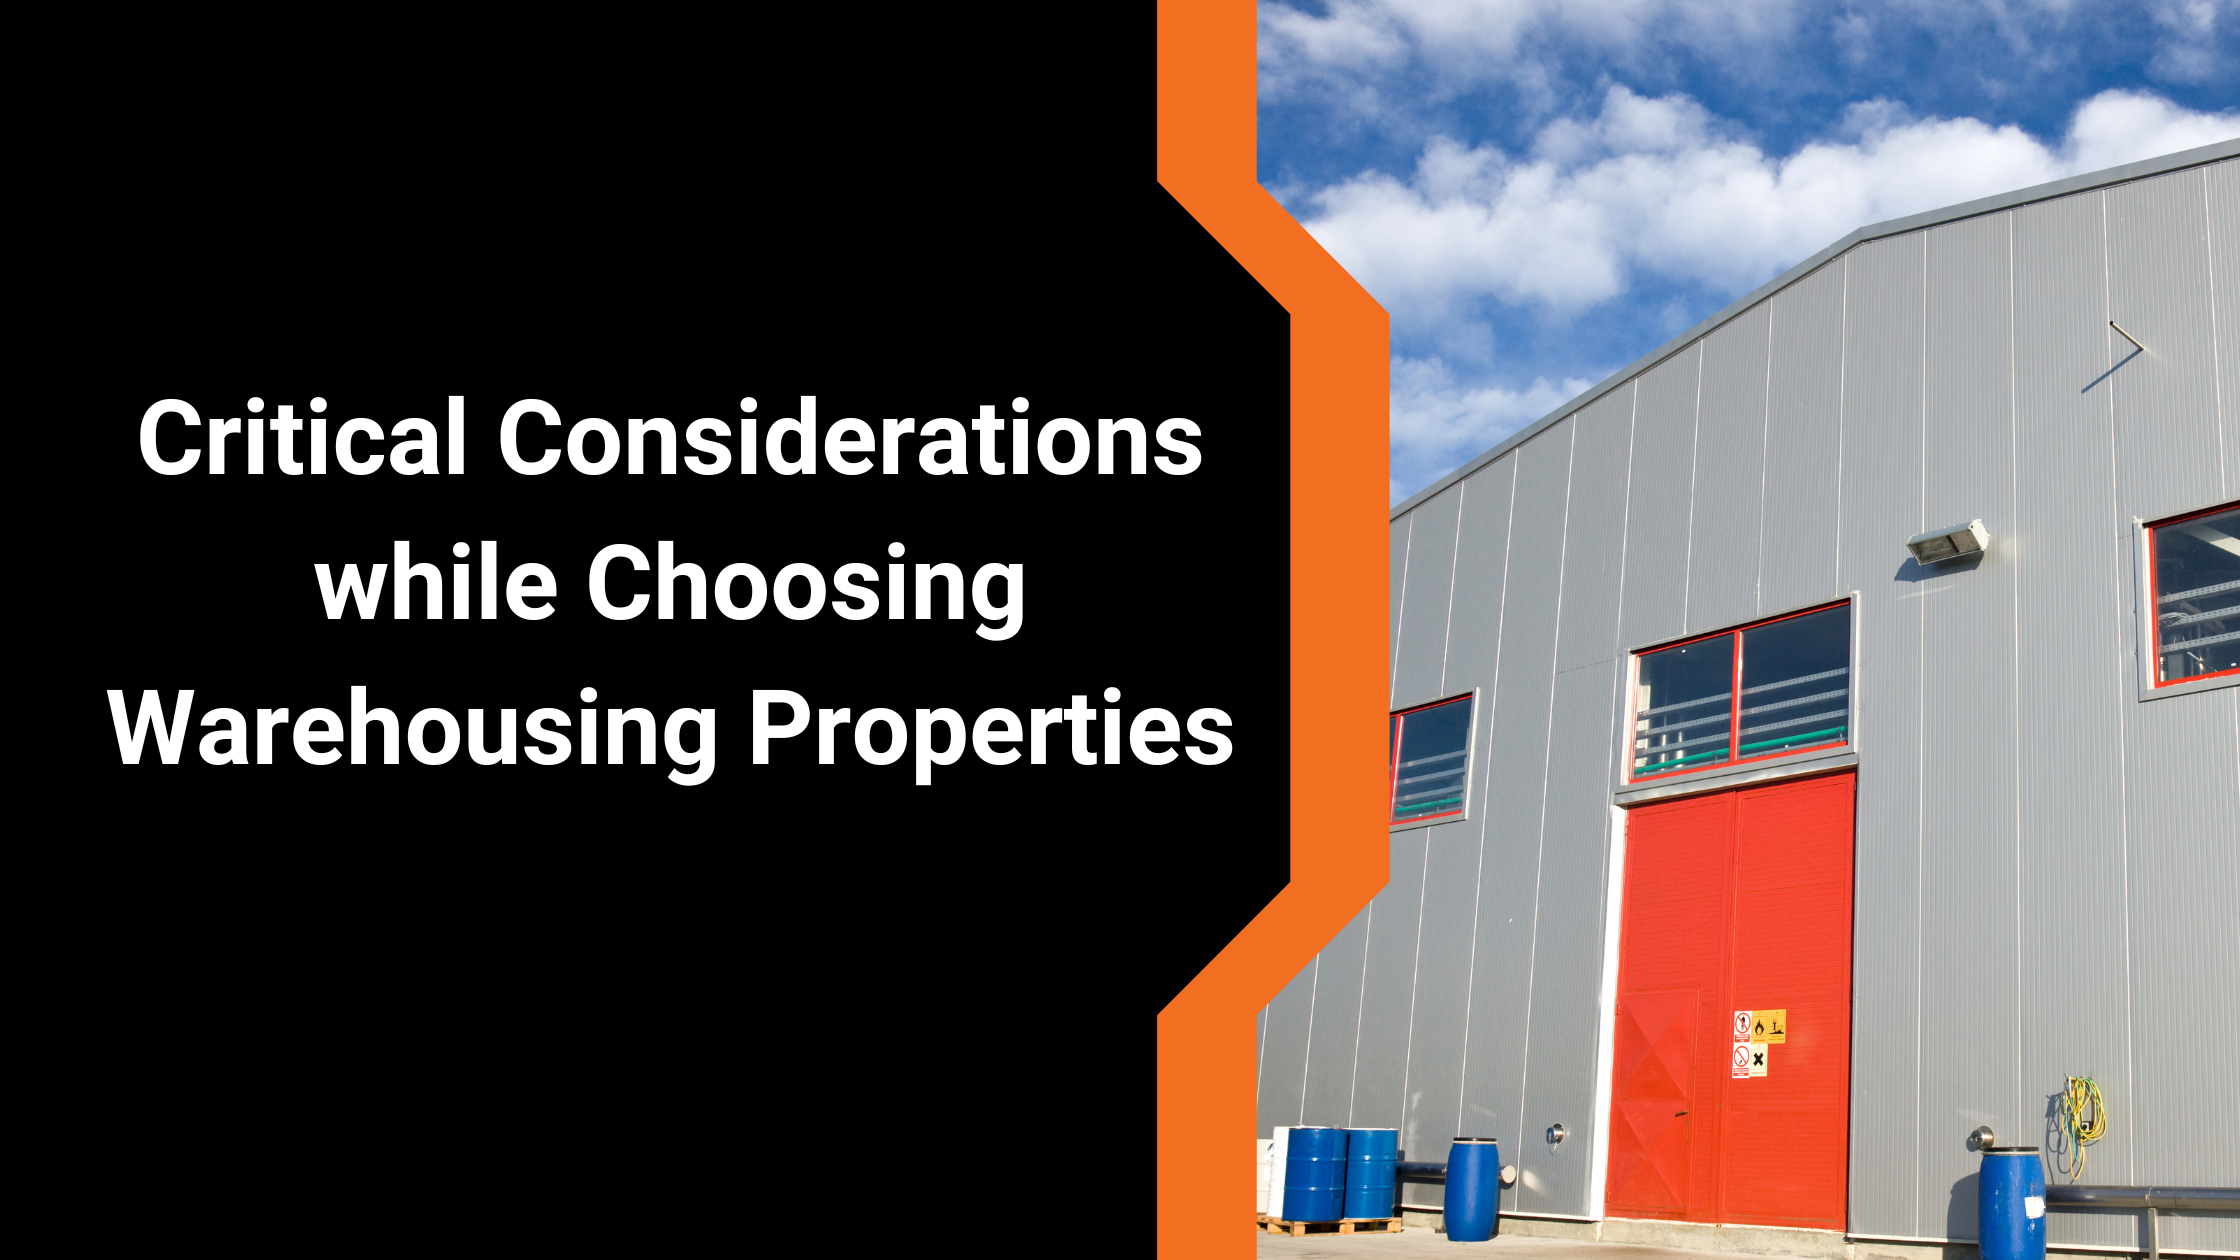 Critical Considerations while Choosing Warehousing Properties